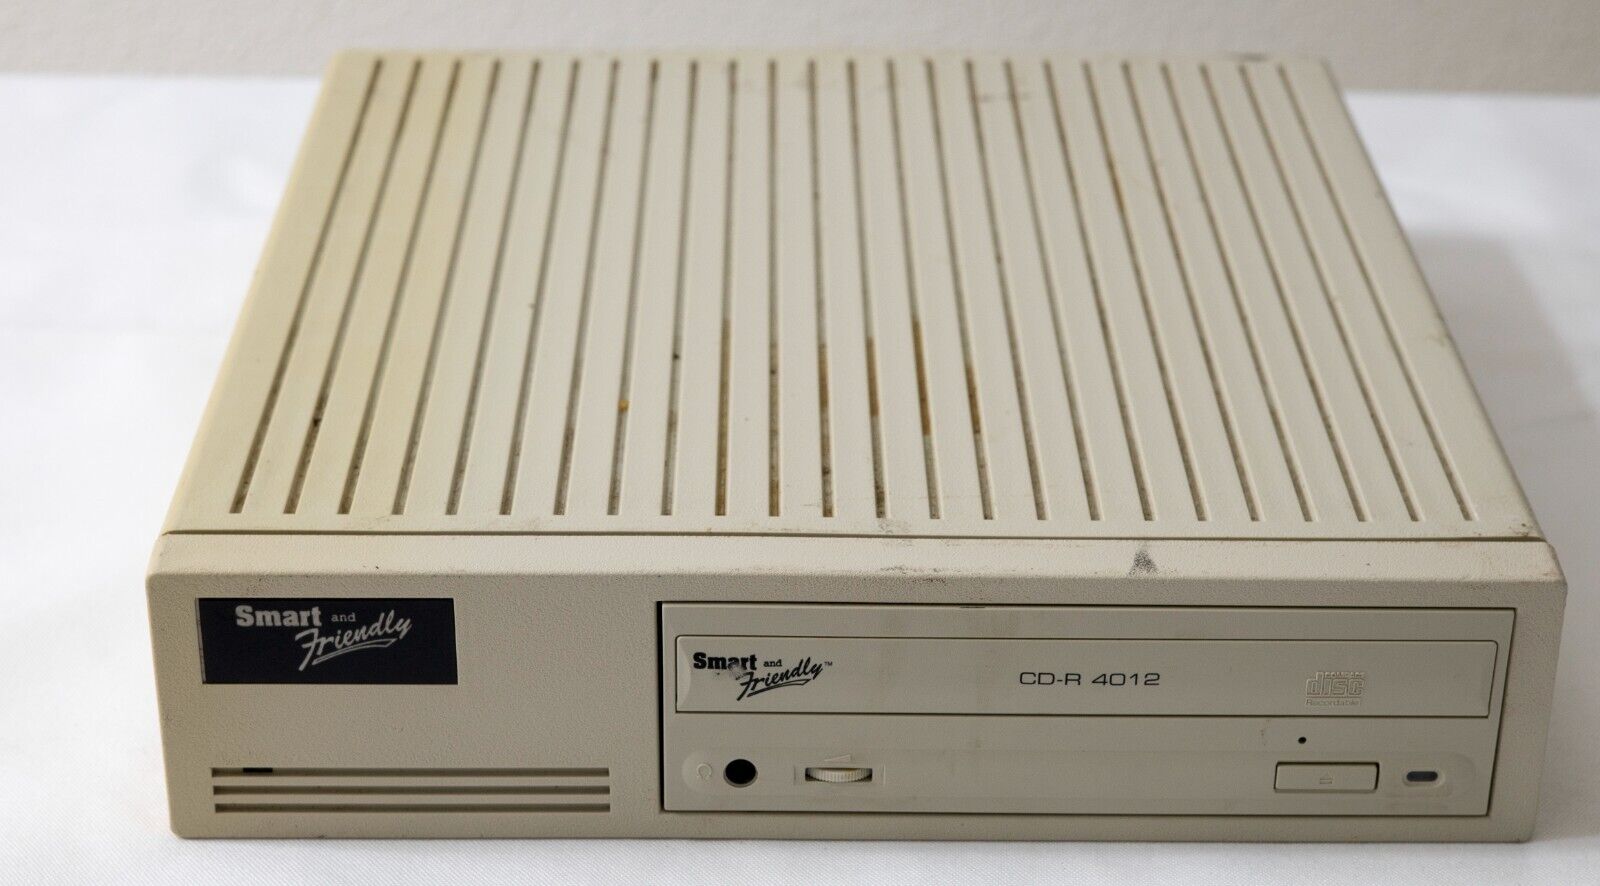 Vintage Smart and Friendly CD-R 4012 SCSI external